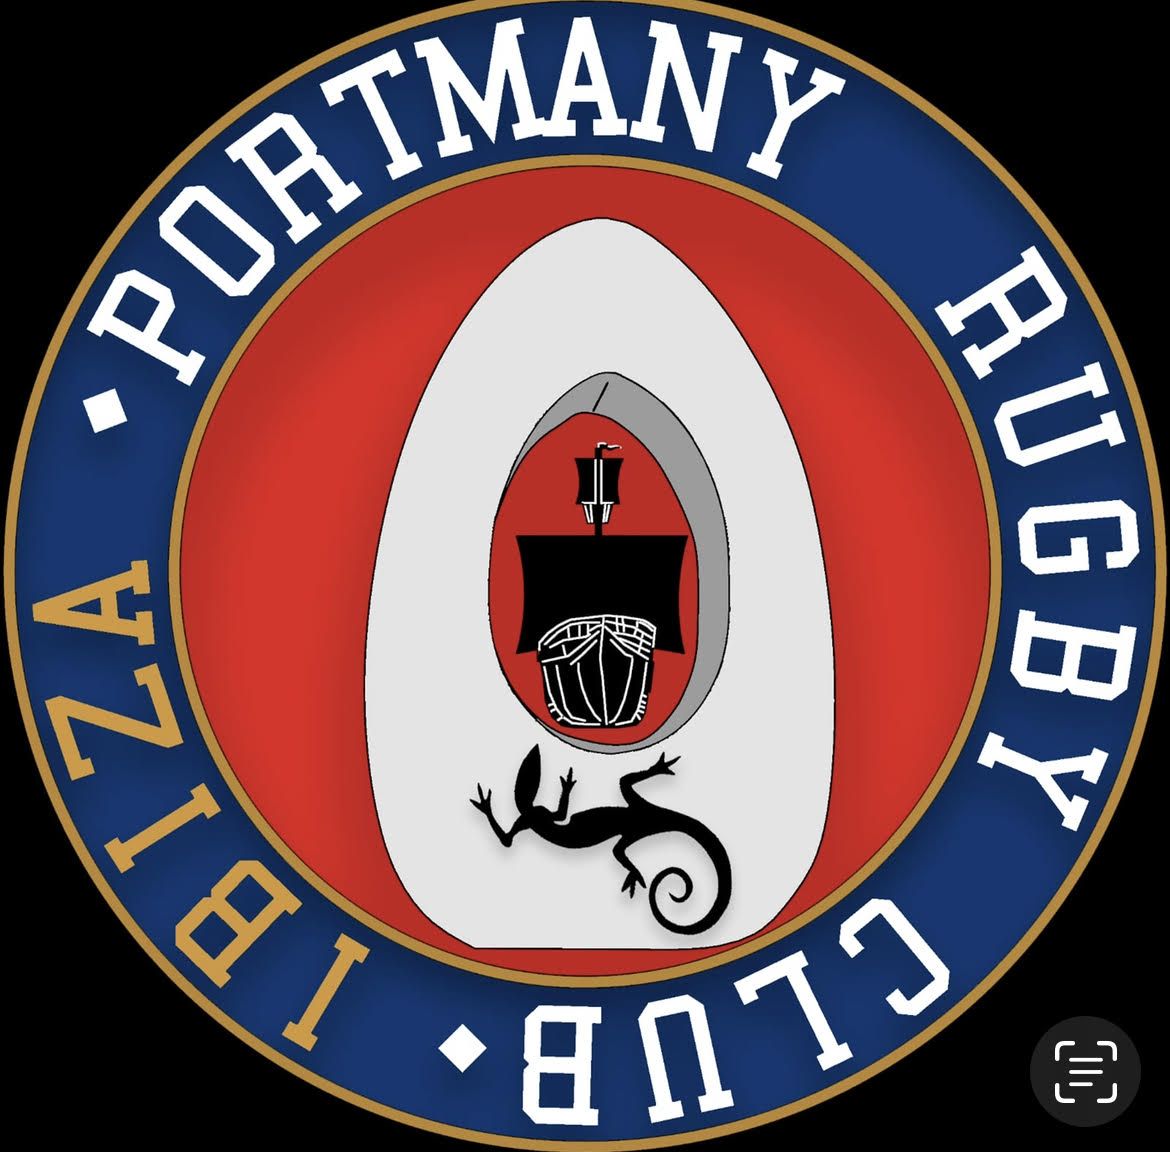 Portmany Rugby Club - Ibiza